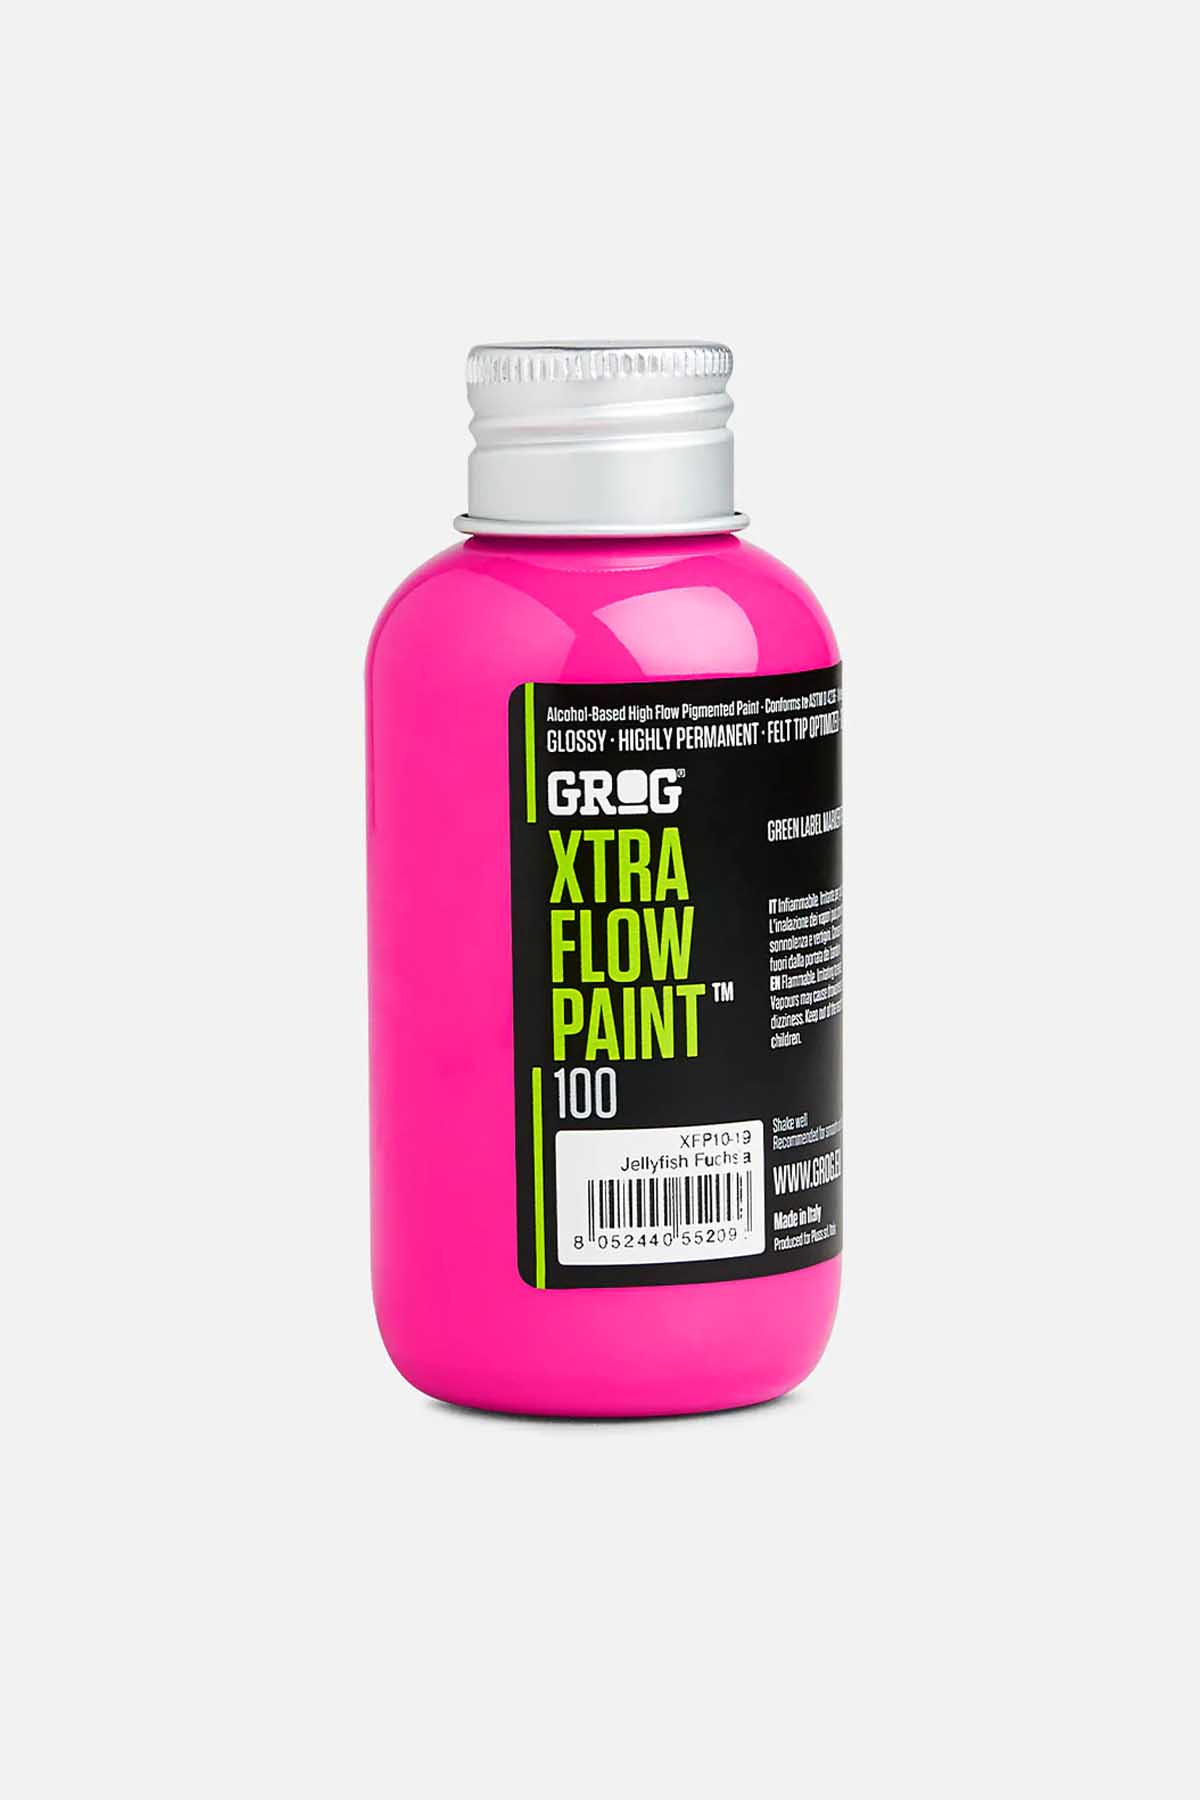 Grog XTRA FLOW PAINT Refill 100ml